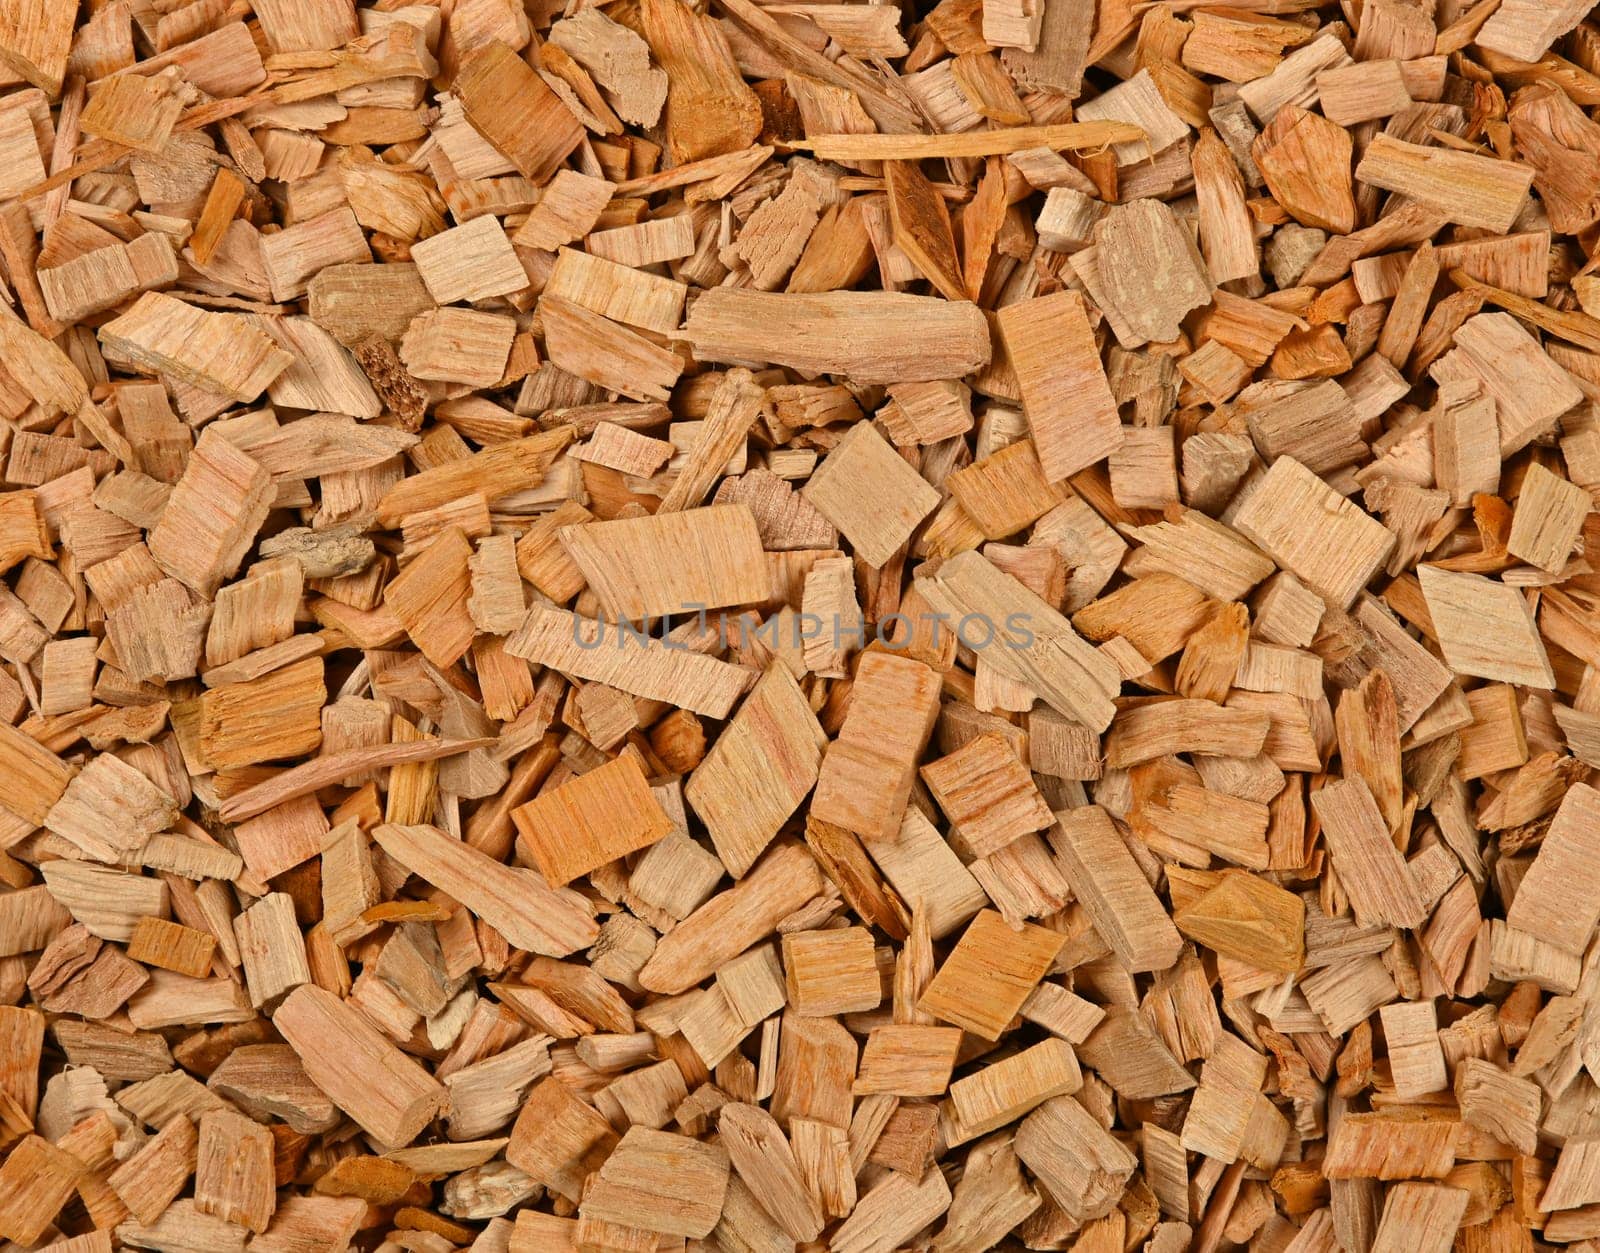 Hardwood alder chips for food smoking by BreakingTheWalls